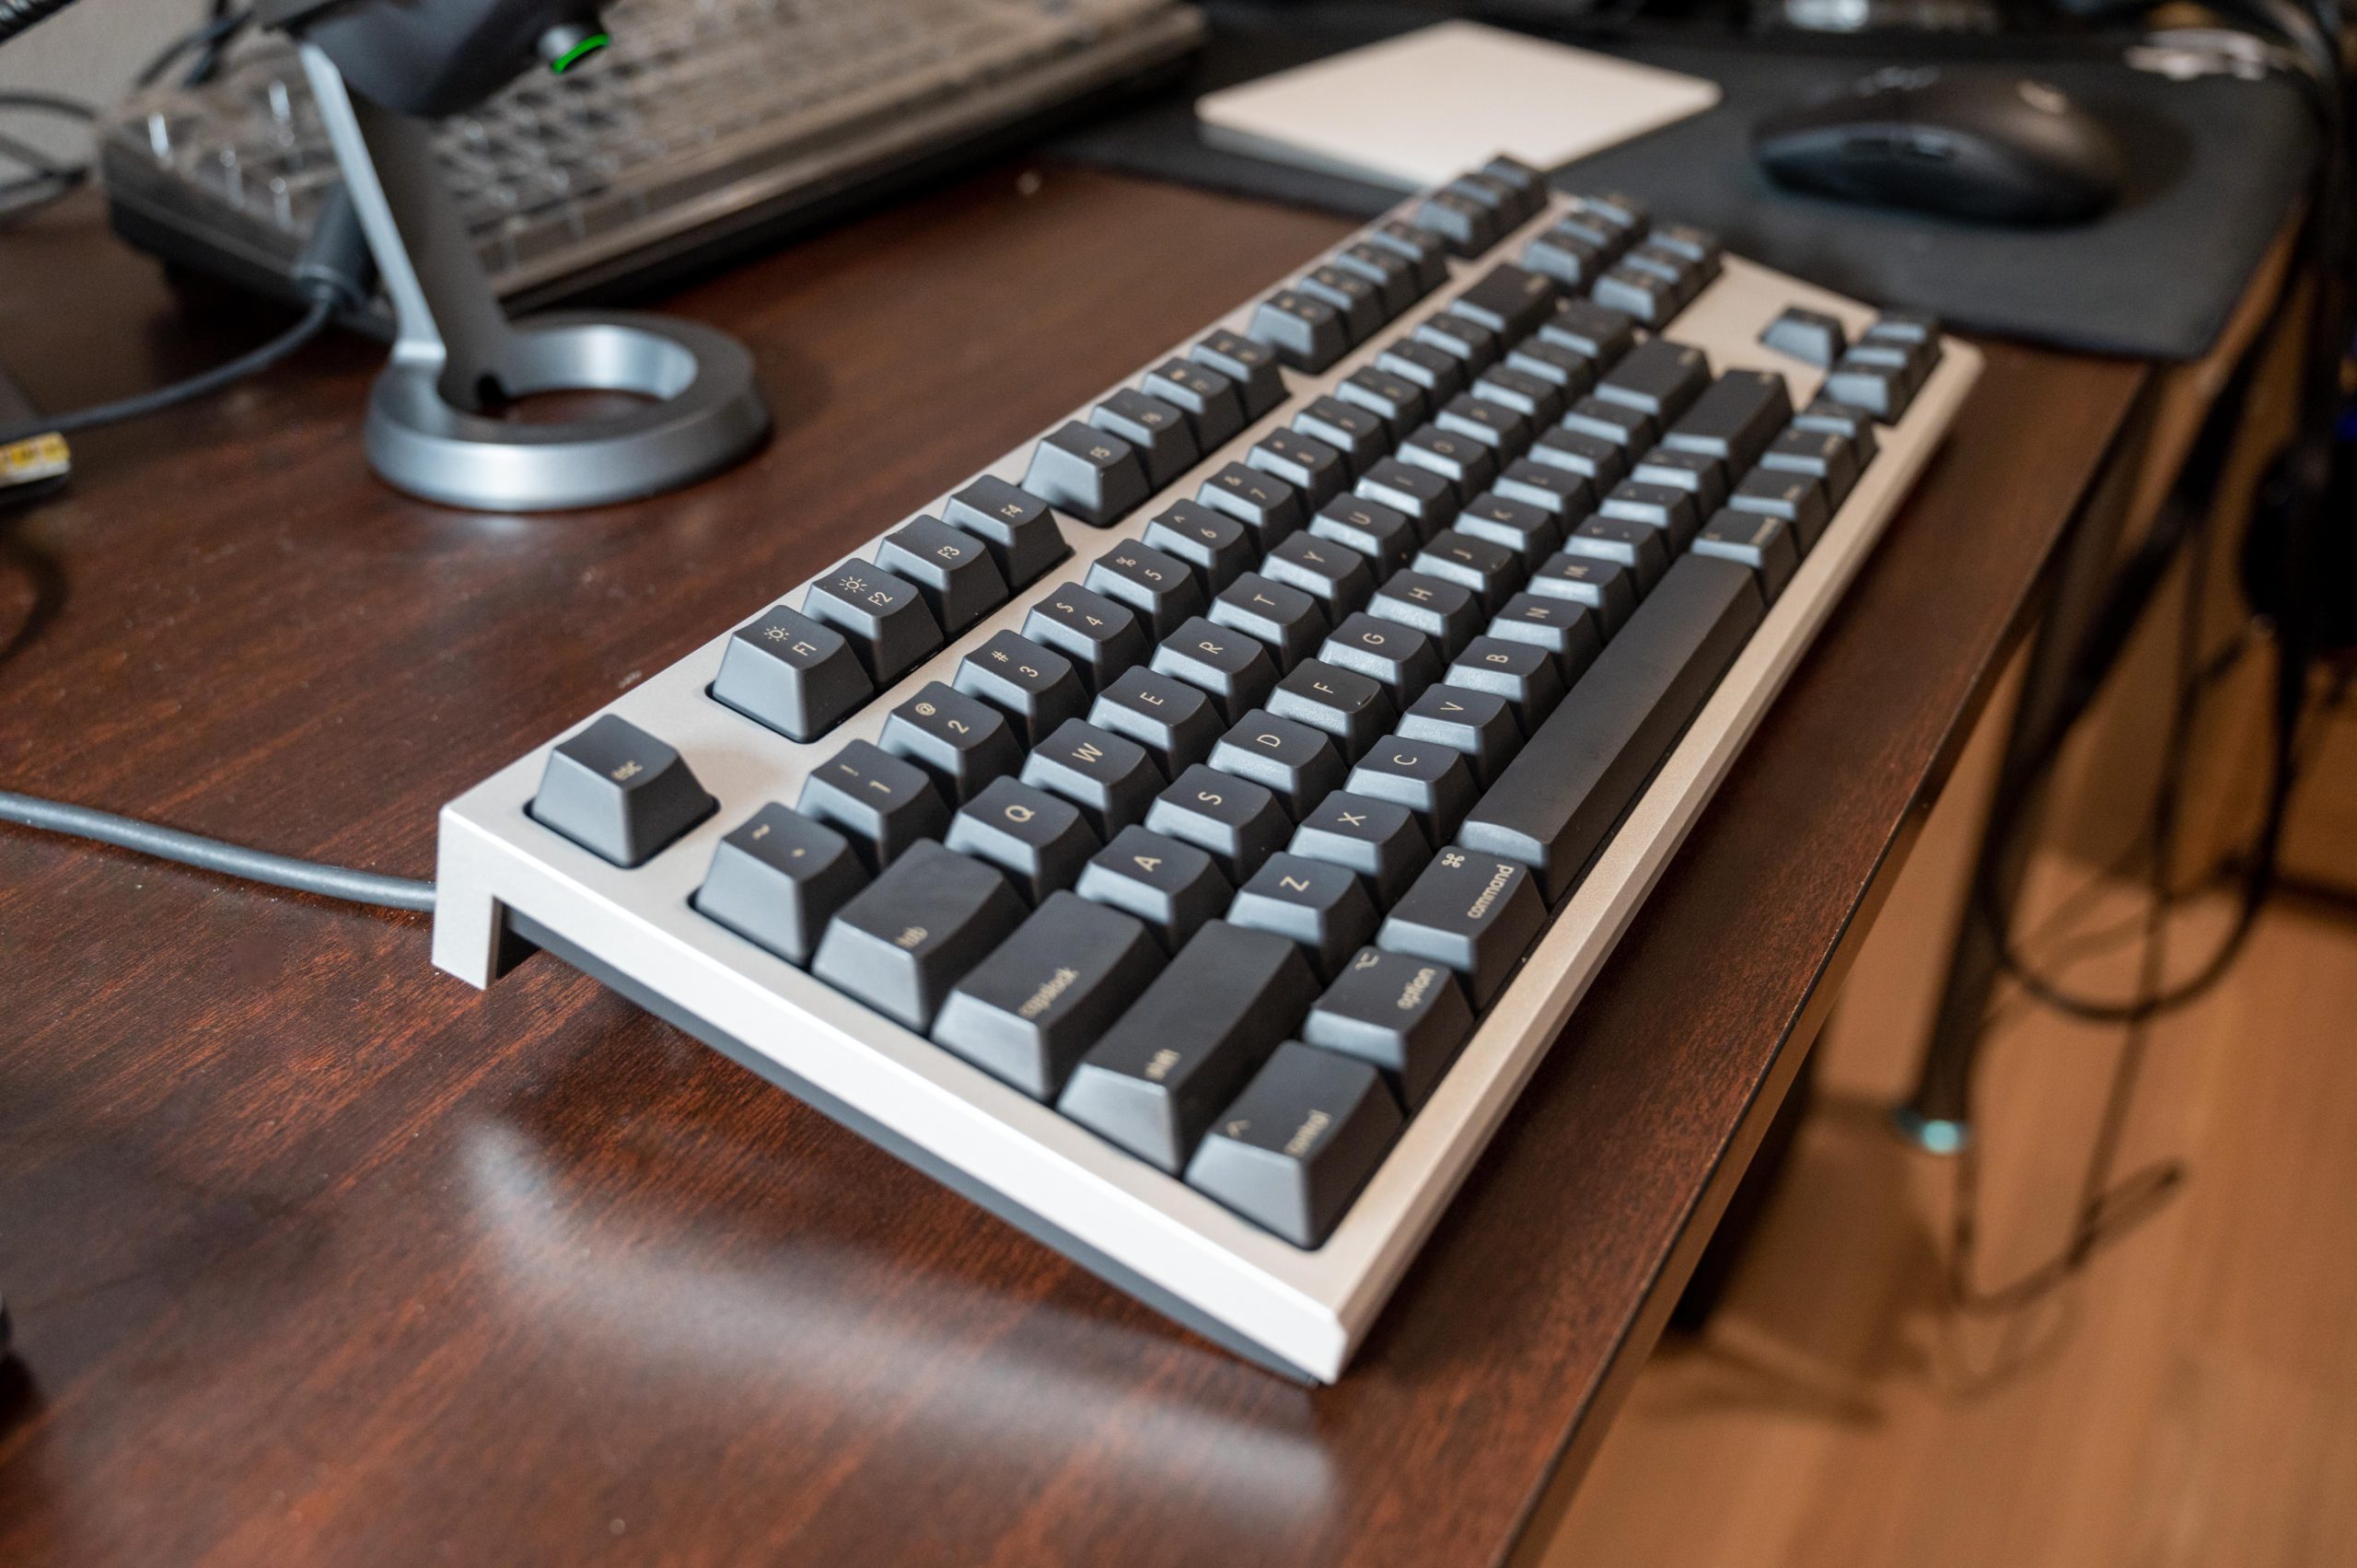 Realforce Keyboard